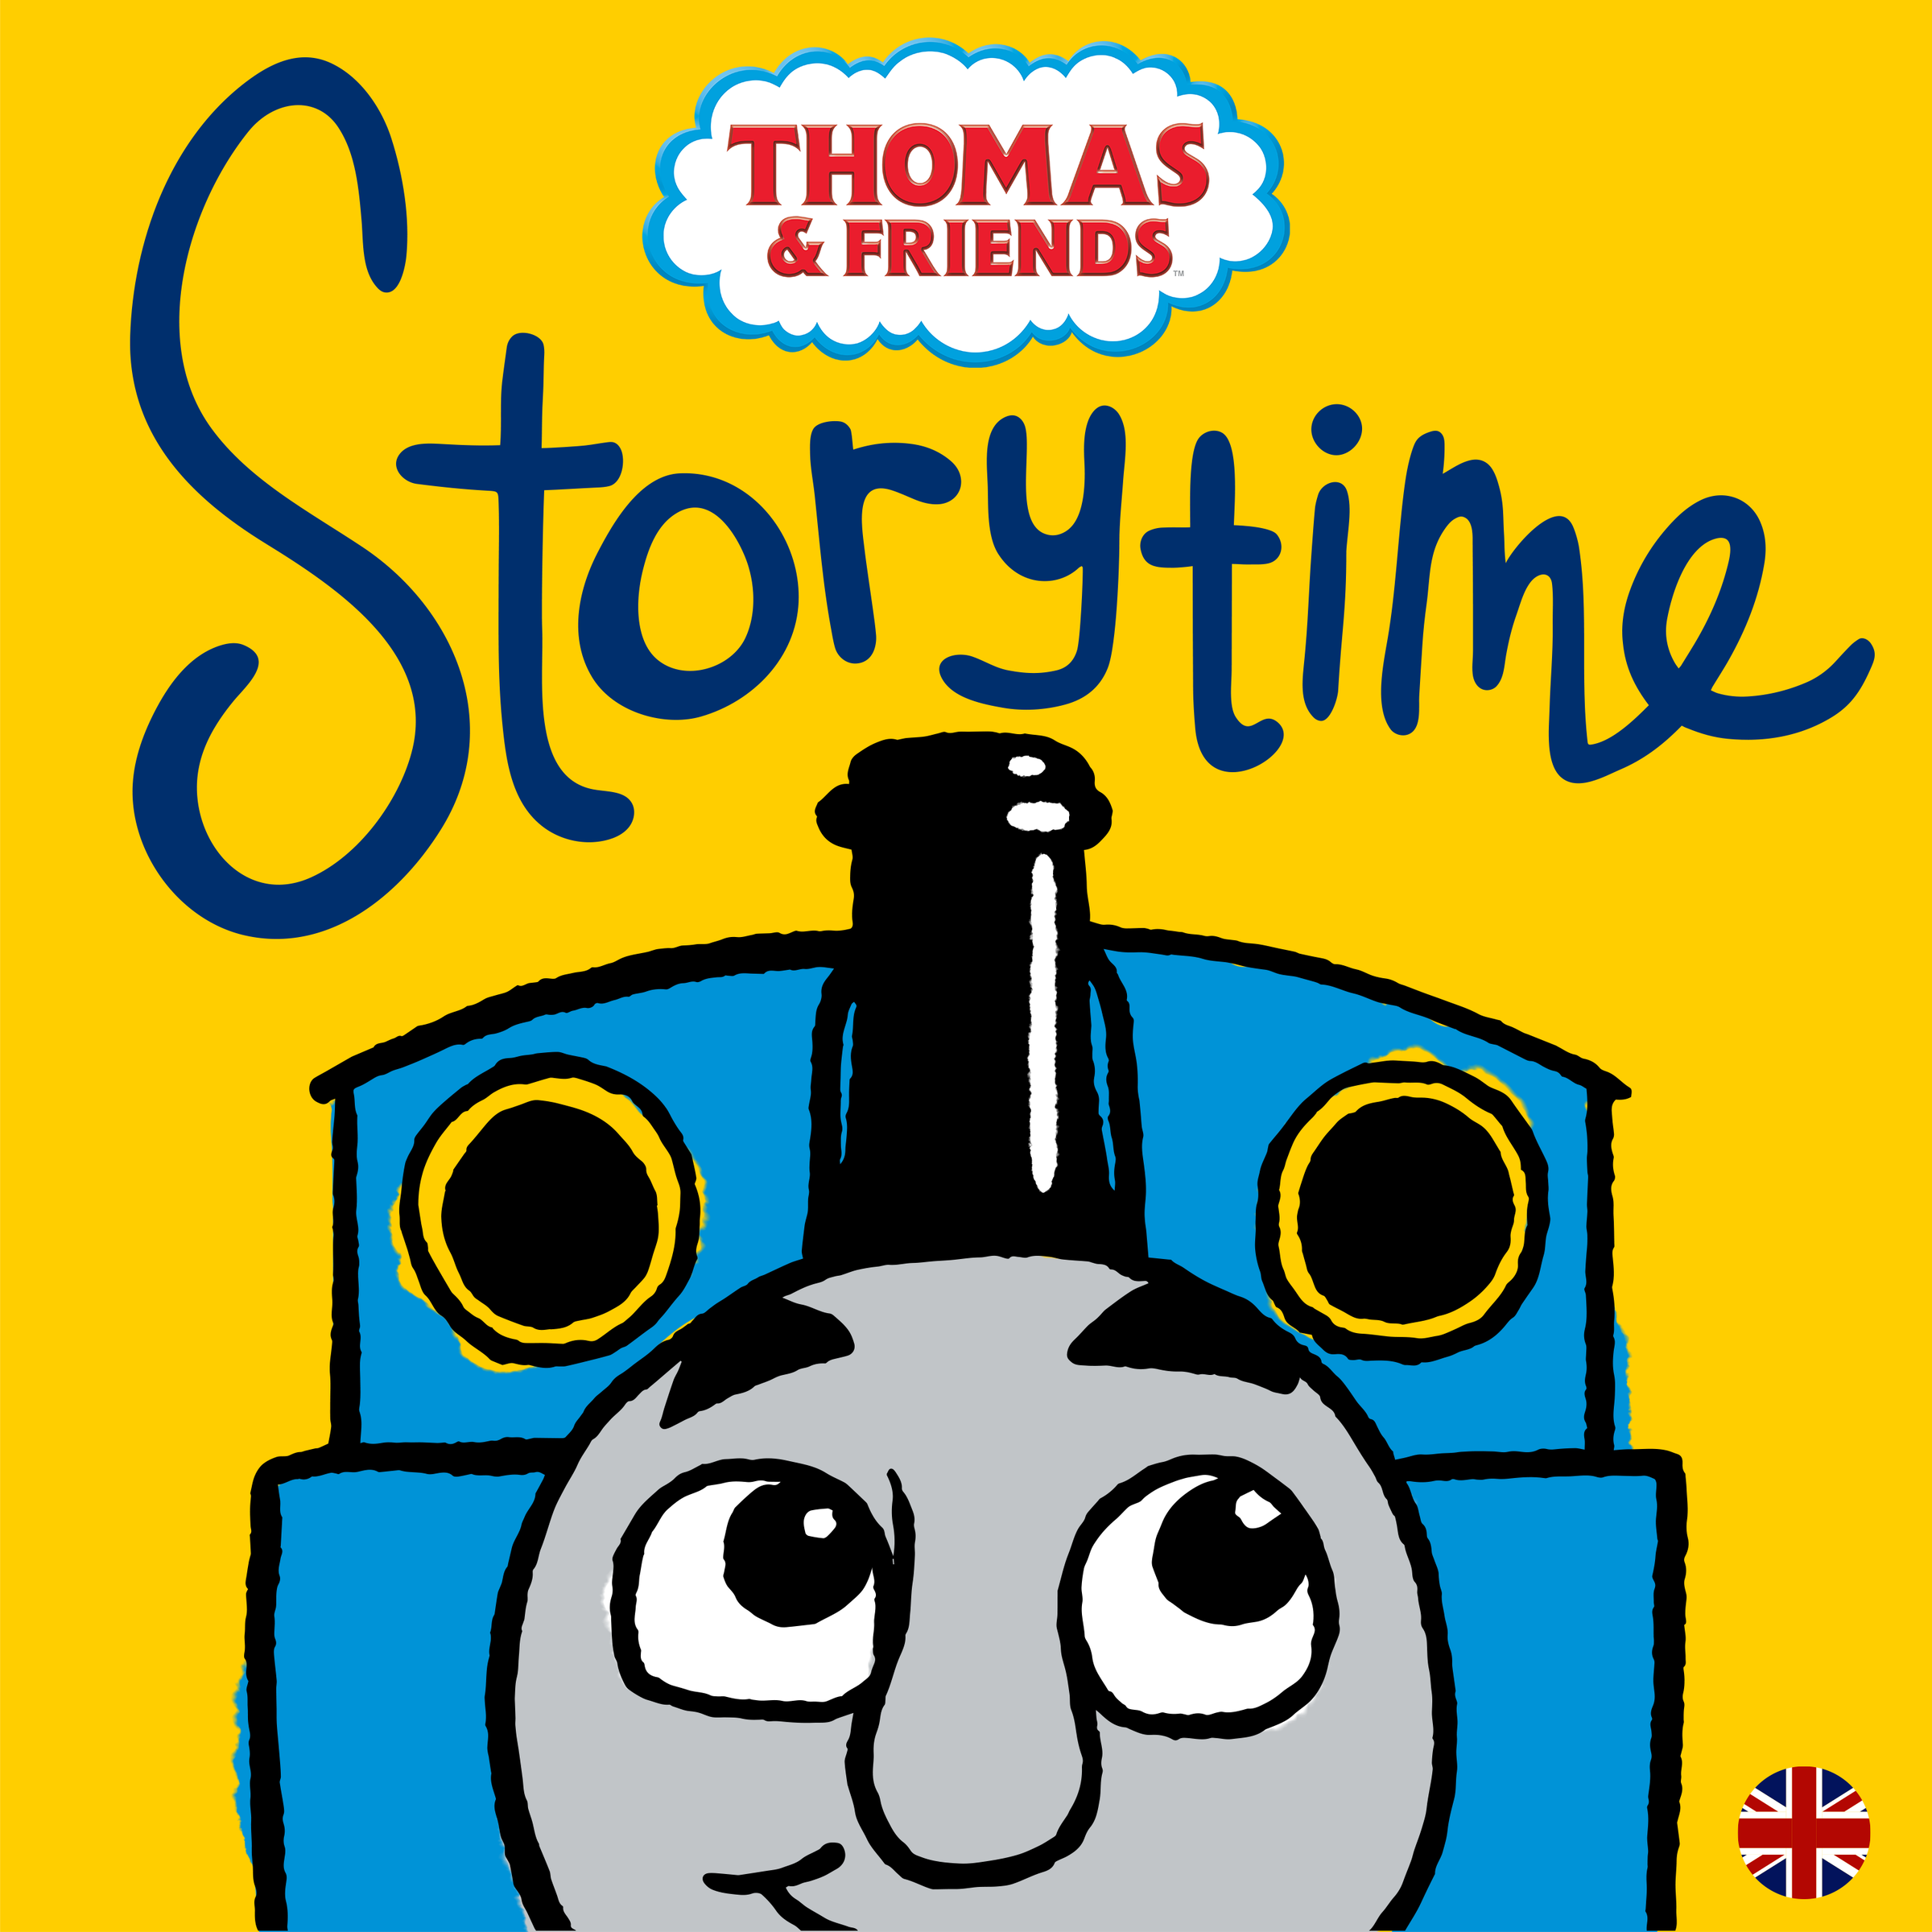 Thomas & Friends Storytime | Thomas the Tank Engine Wikia | Fandom